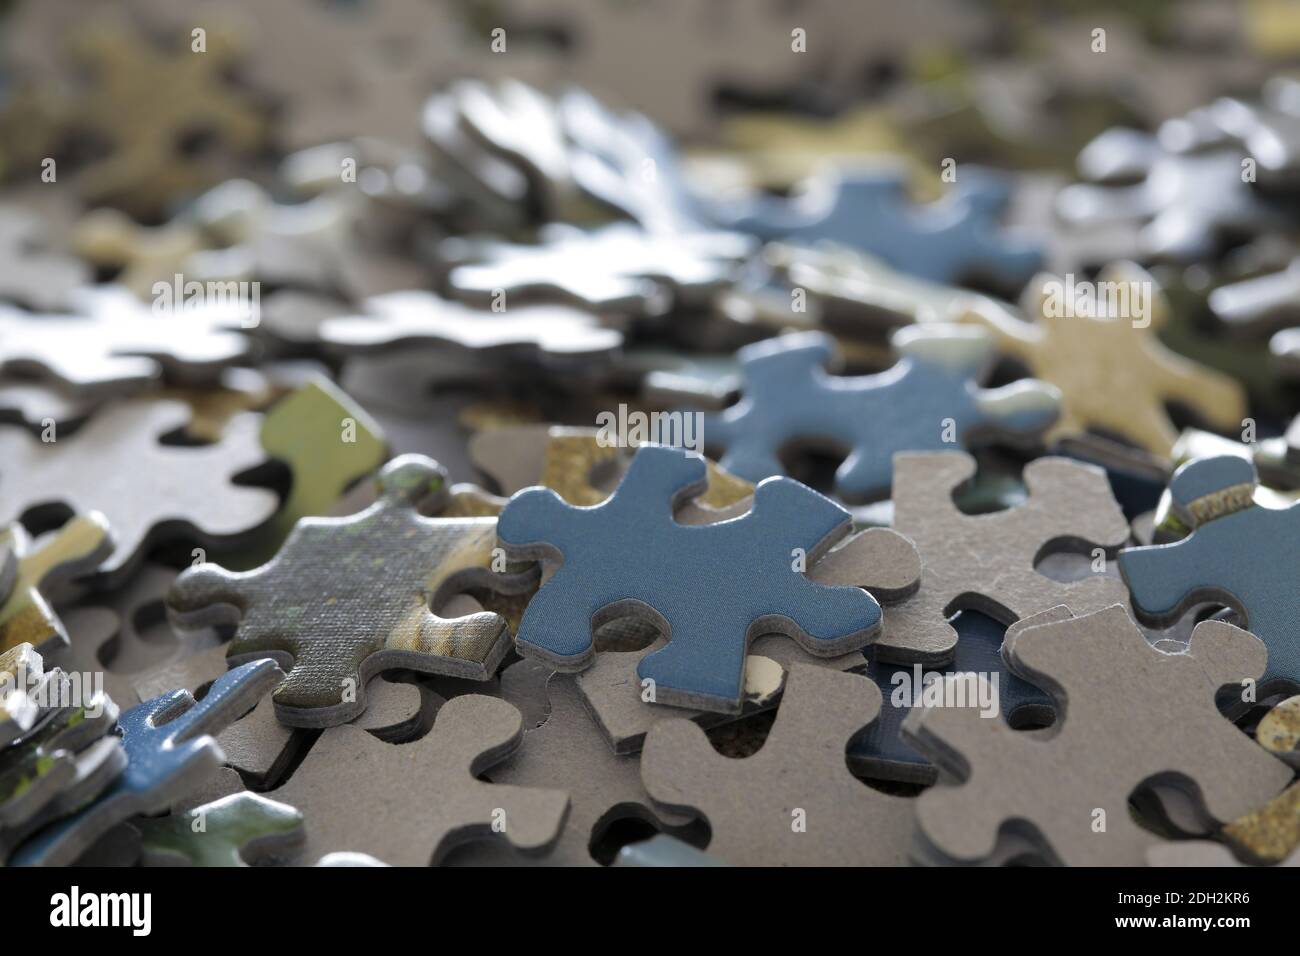 Puzzle, puzzle game, Stock Photo